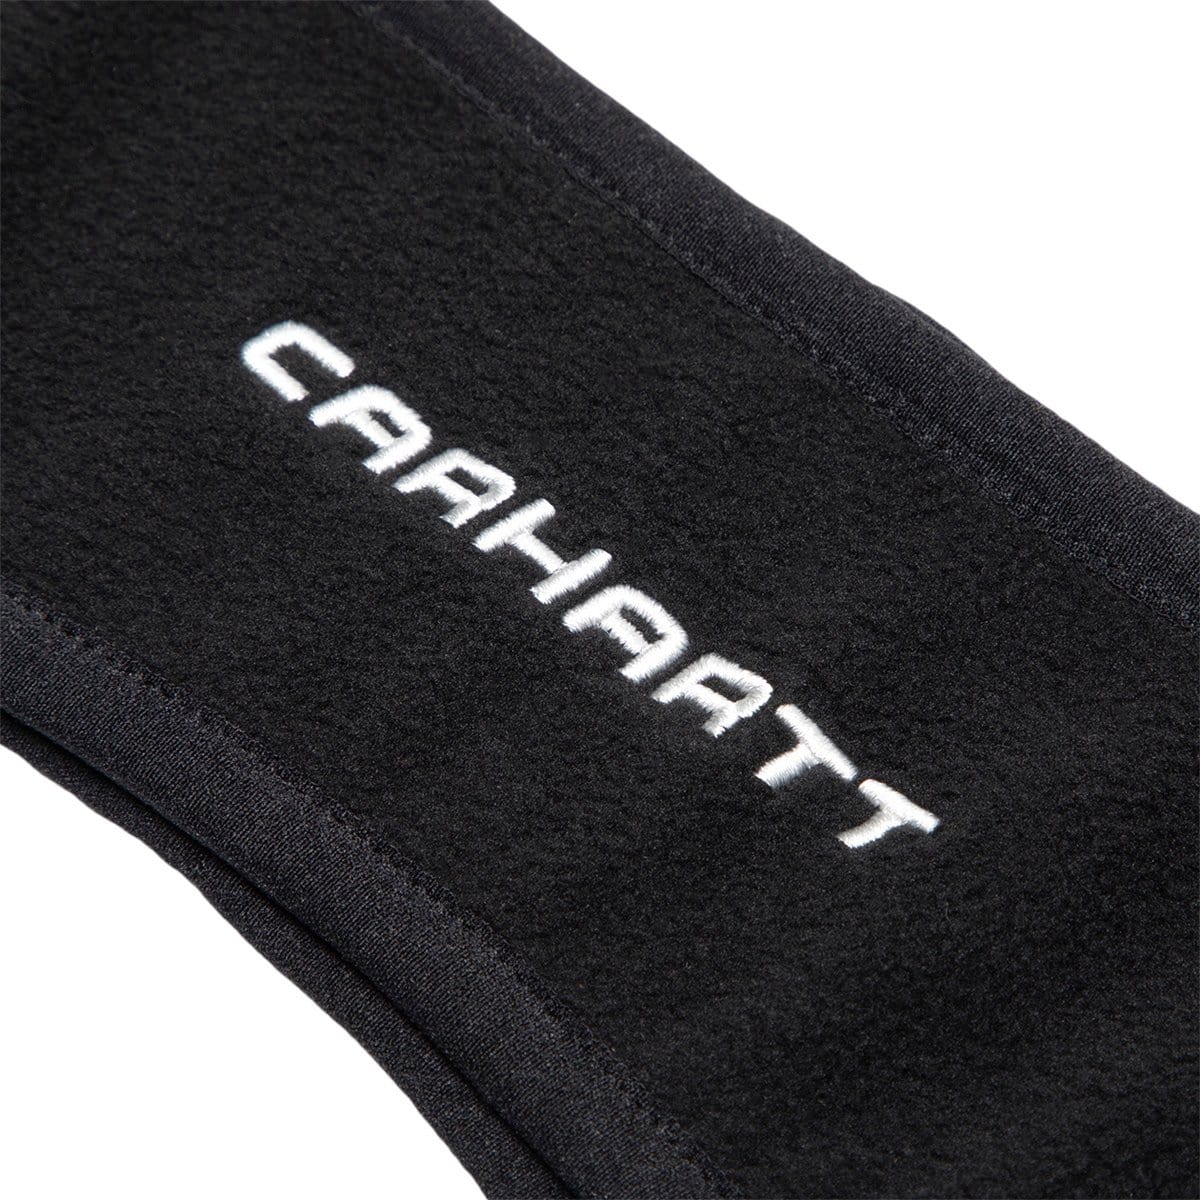 Carhartt W.I.P. Headwear BLACK/WAX / OS BEAUMONT HEADBAND